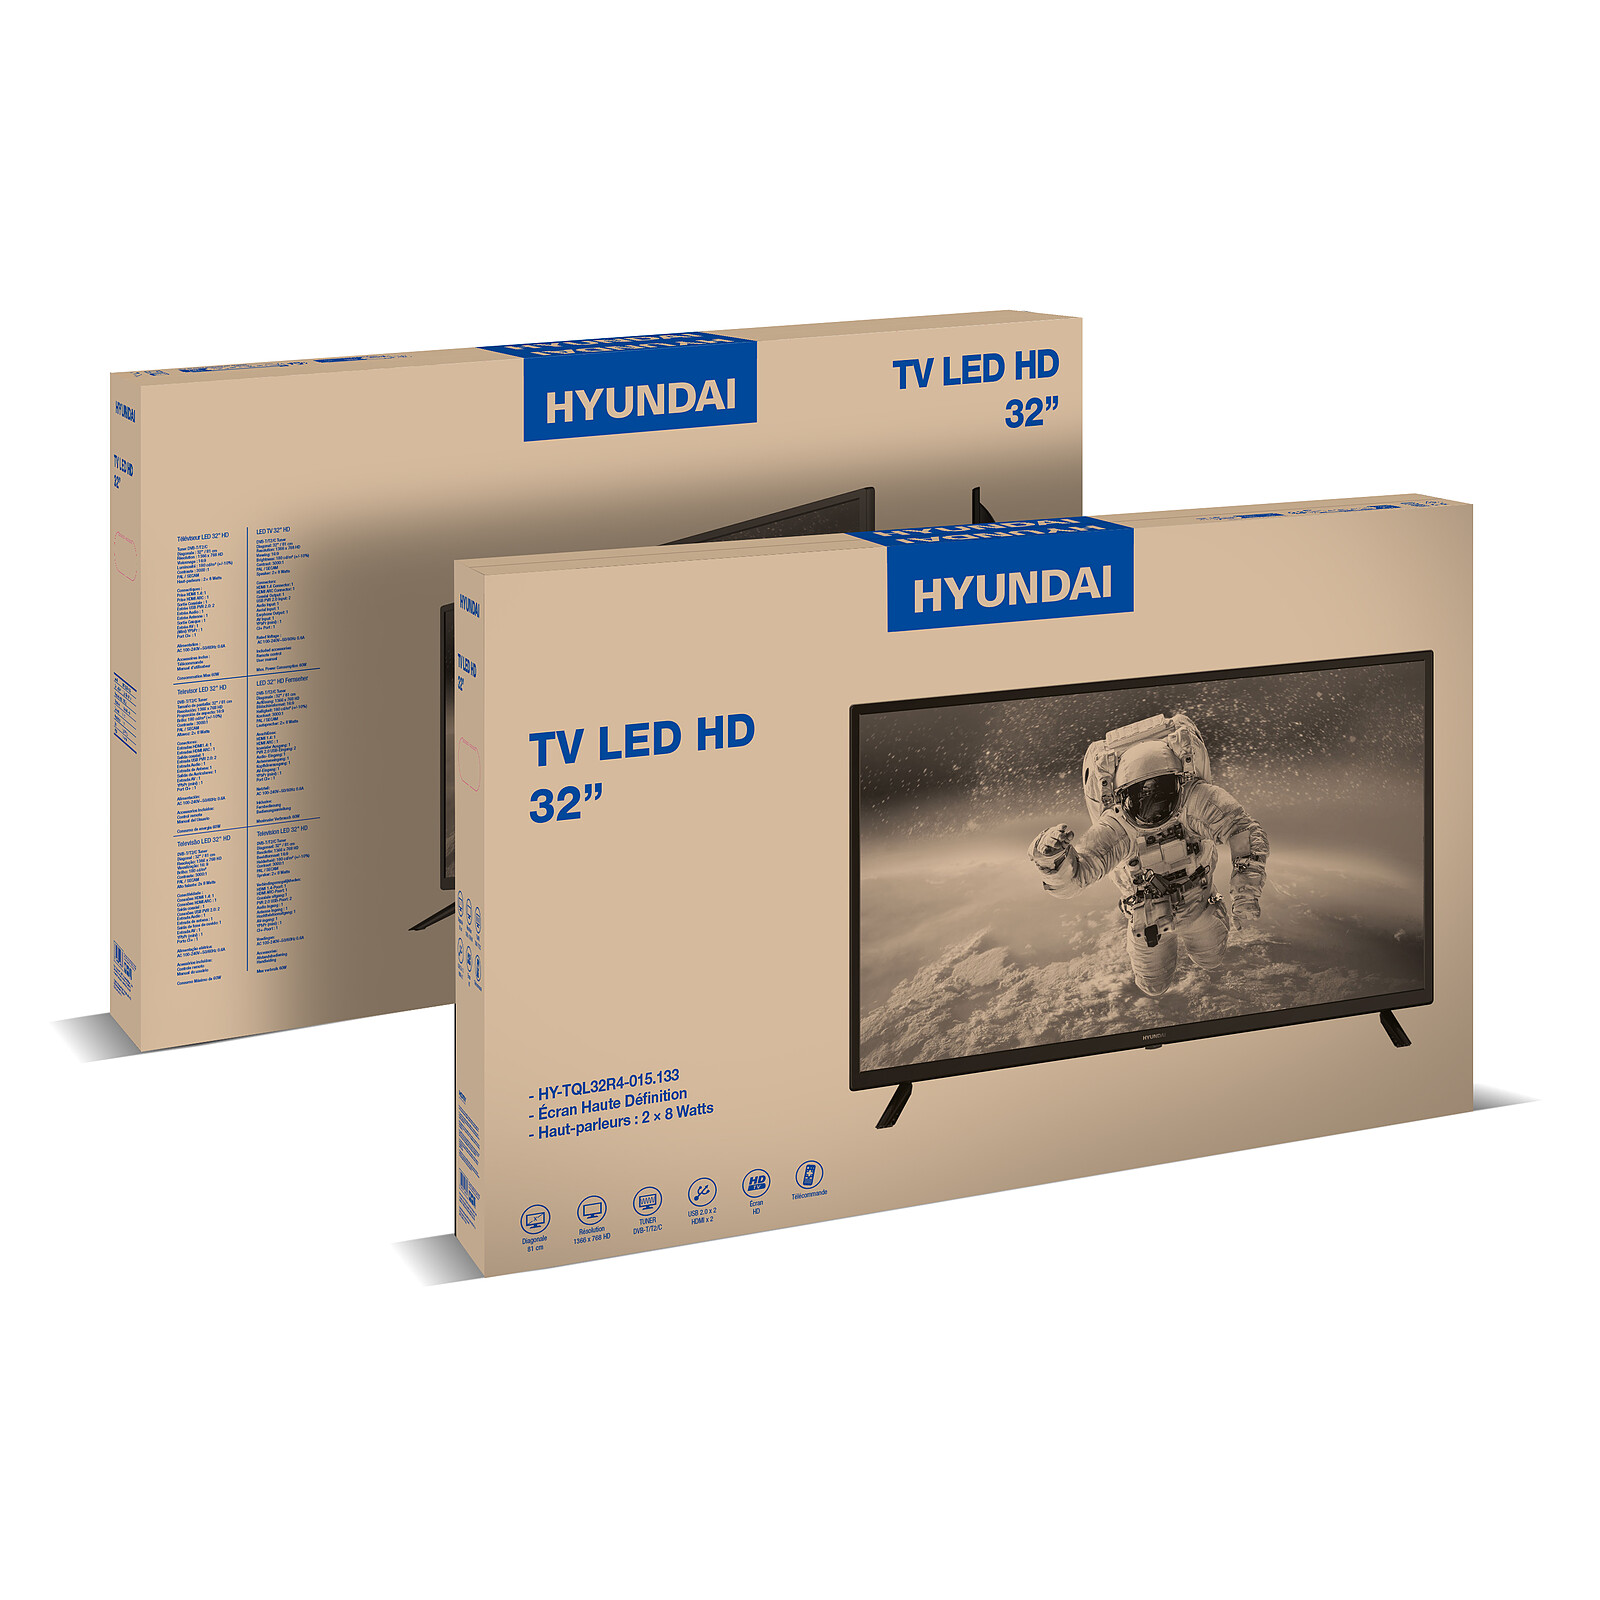 HYUNDAI HY-TVS32HD-012 - TV - LDLC